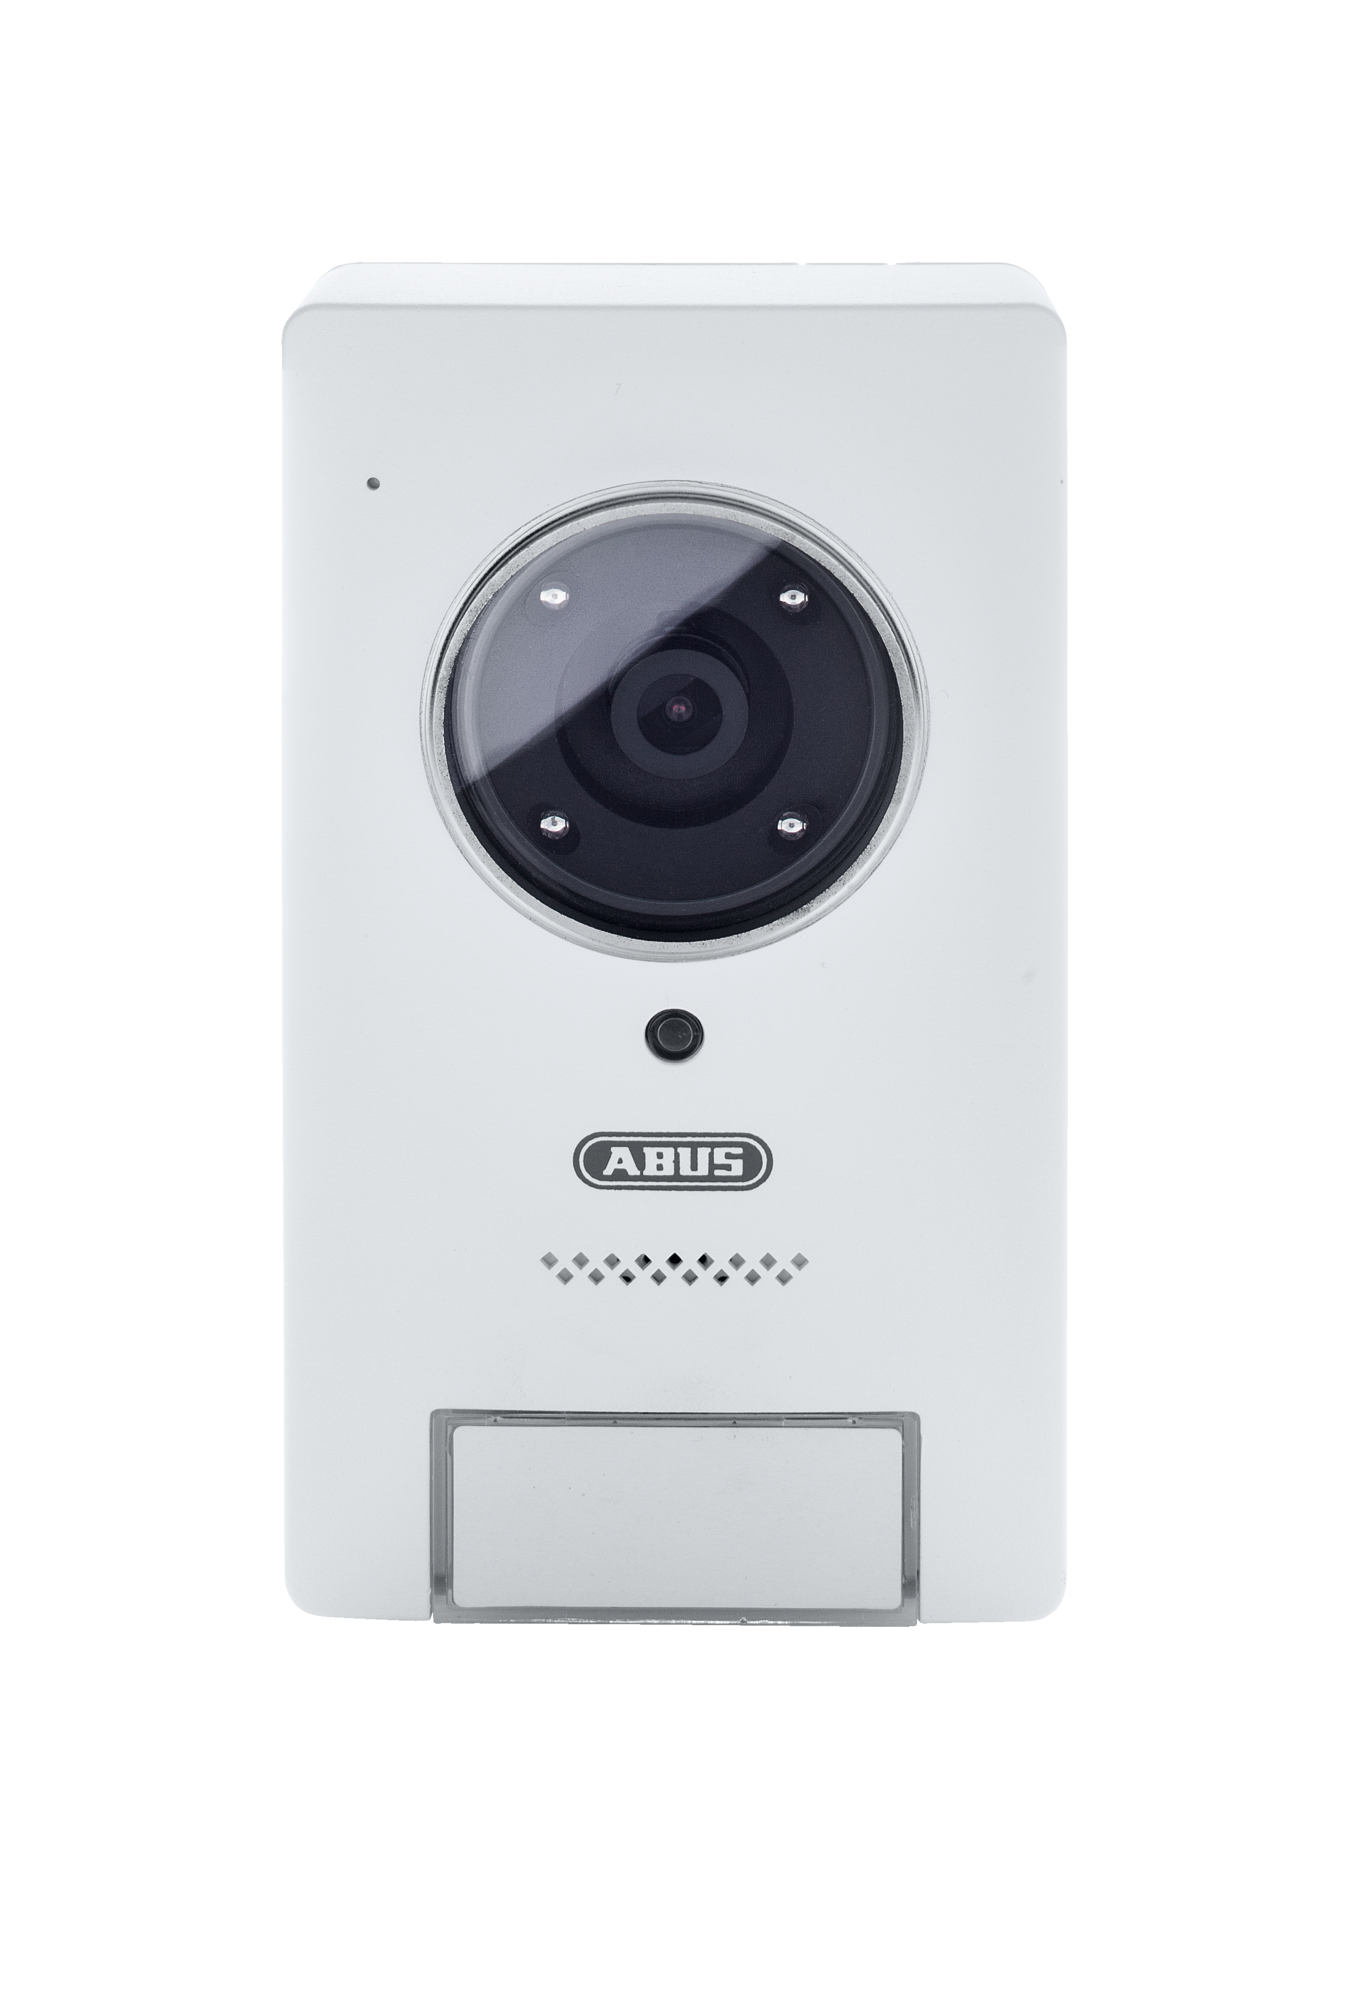 ABUS PPIC35520, Überwachungskamera, Auflösung Video: HD (1080p) Full / HD (480p) (720p) VGA 